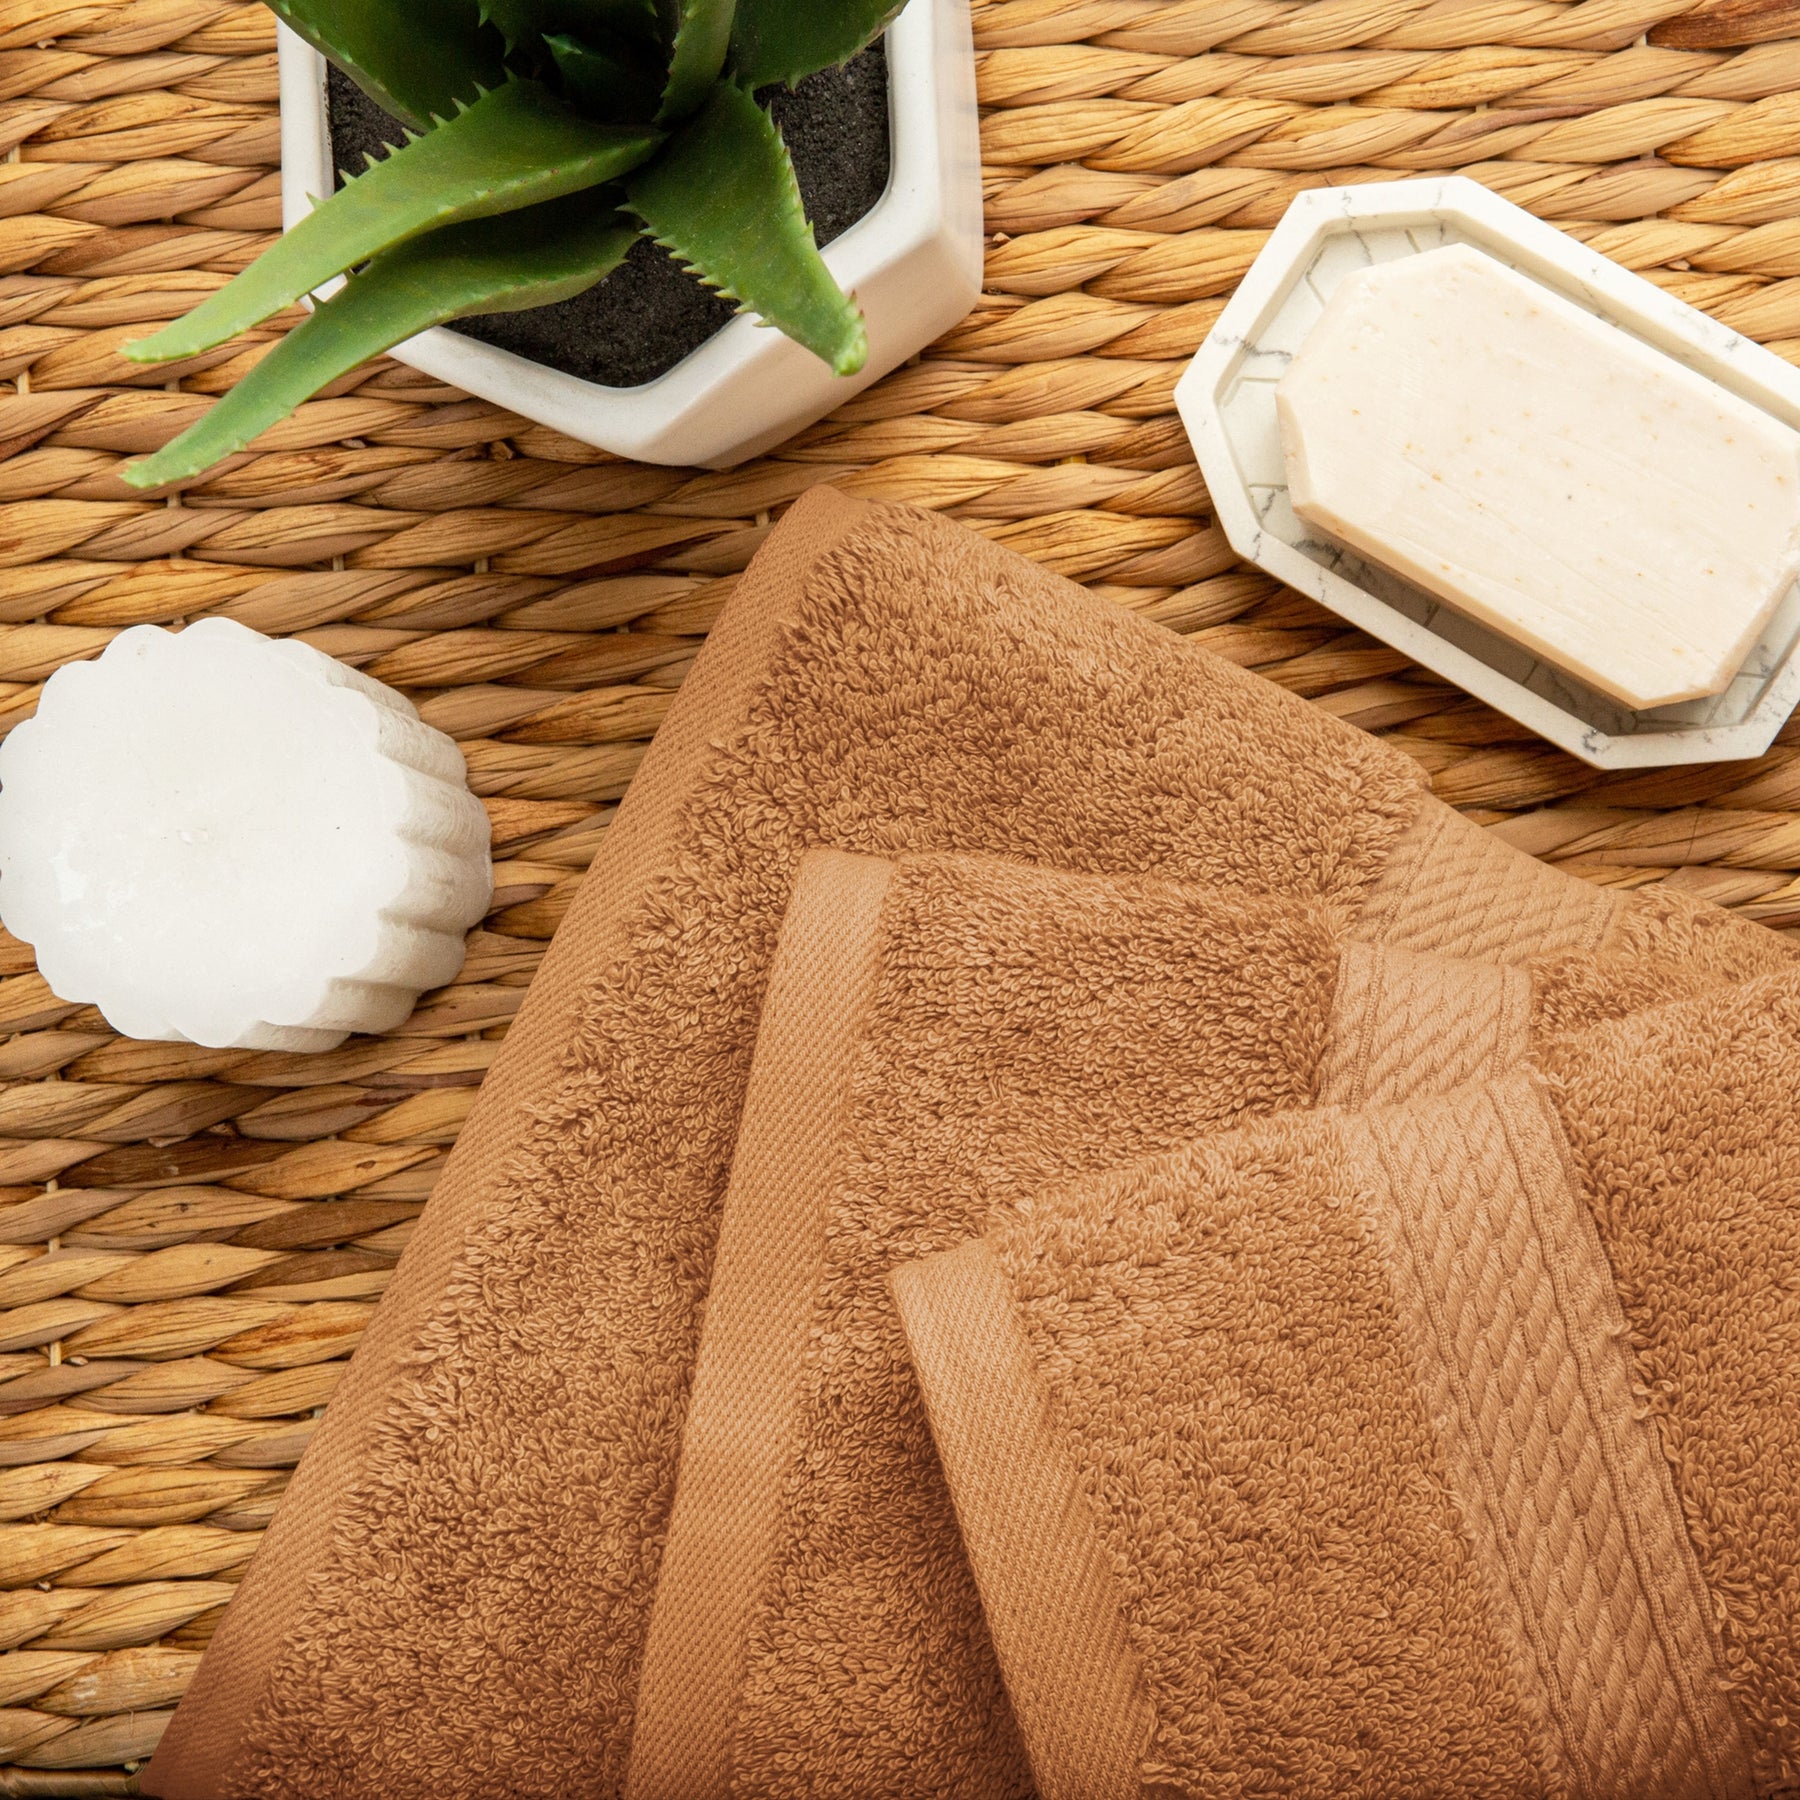 Superior Solid Egyptian Cotton Bath Towel Set, 30 x 55, White, 2-Pieces